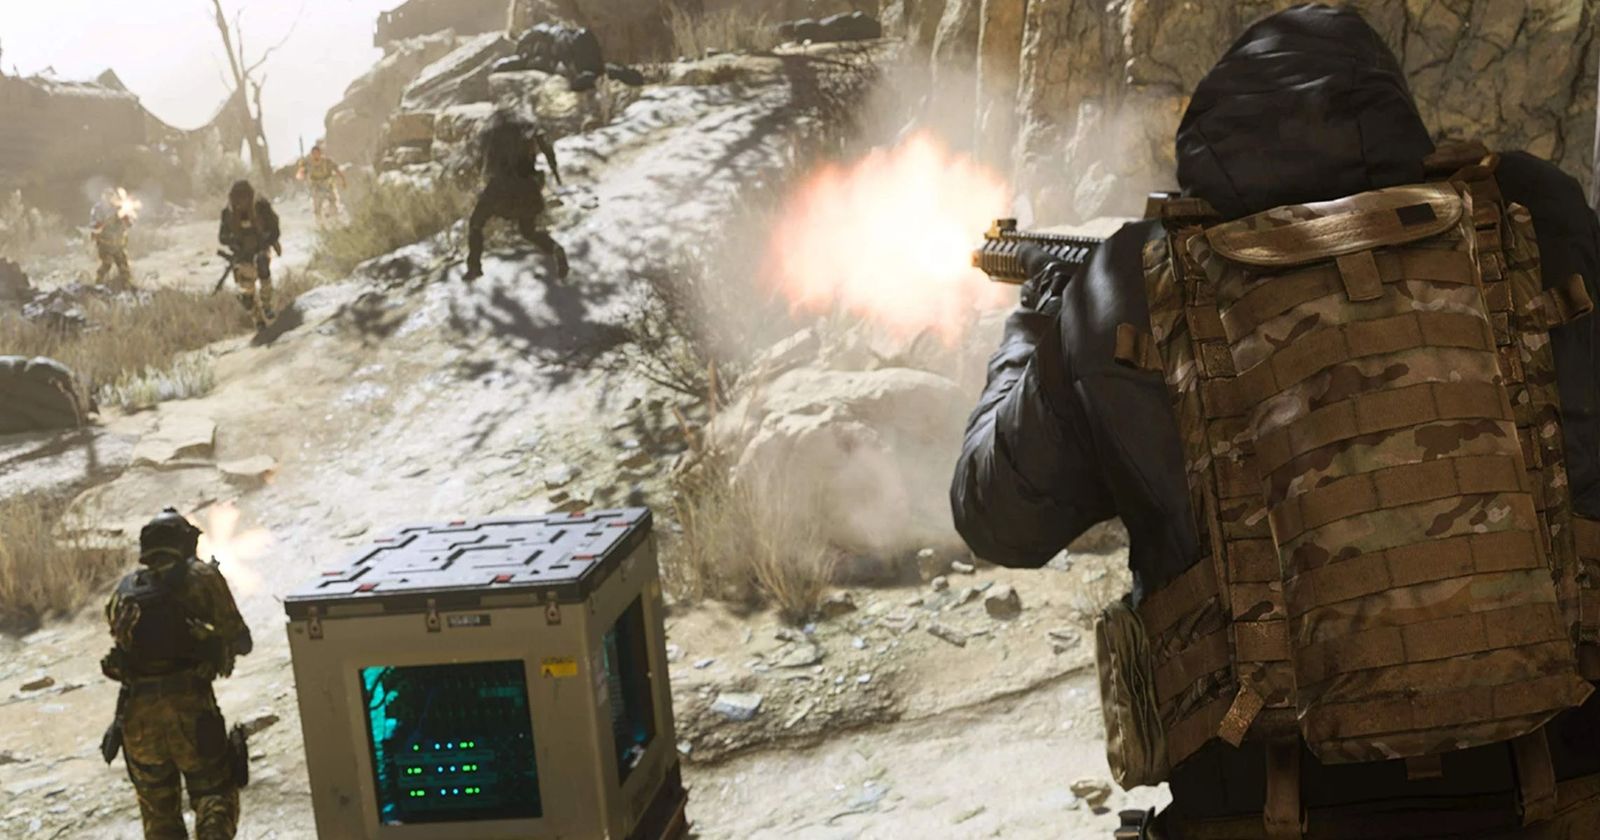 Best Call of Duty Modern Warfare 3 ROG Ally Game Settings